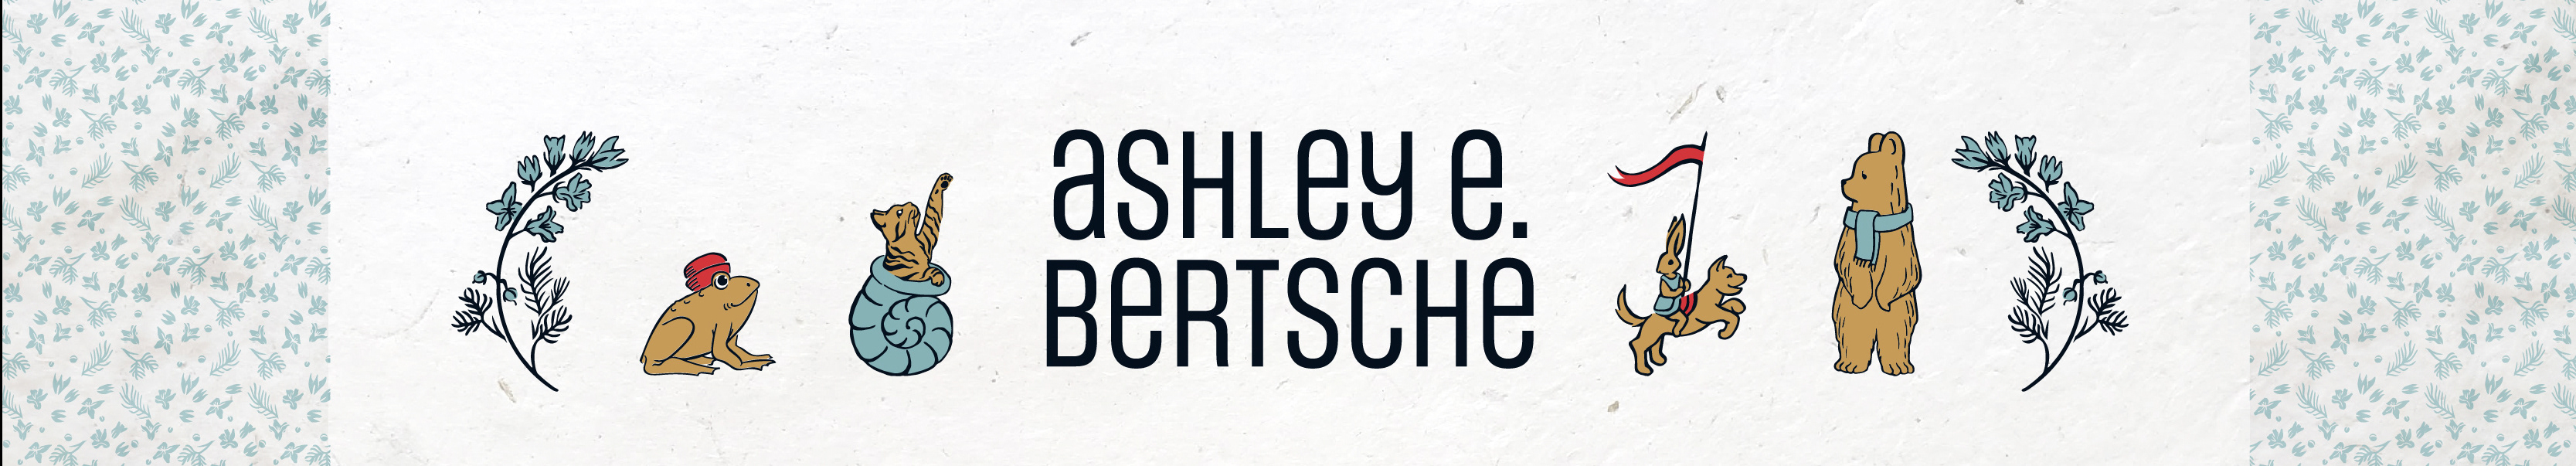 Ashley Bertsche profil başlığı